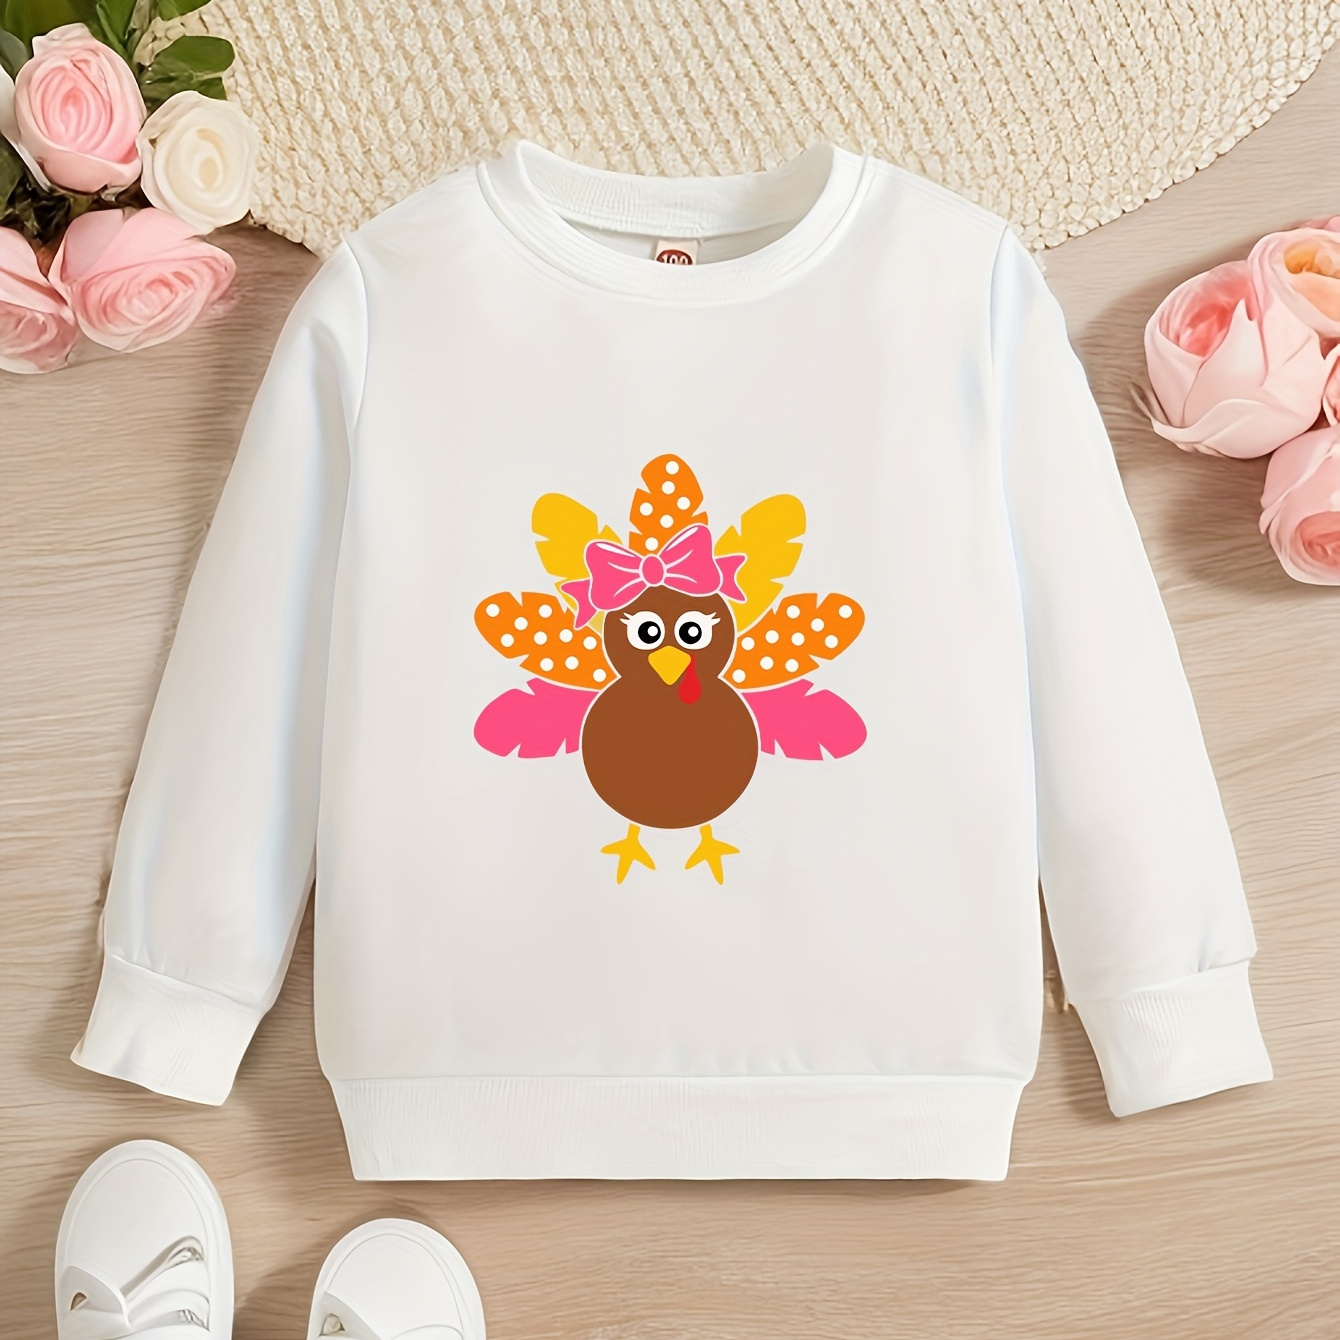 

Sweet Sweatshirt Girls Cute Turkey Print Crew Neck Pullover Trendy Tops For Autumn Party Thanksgiving